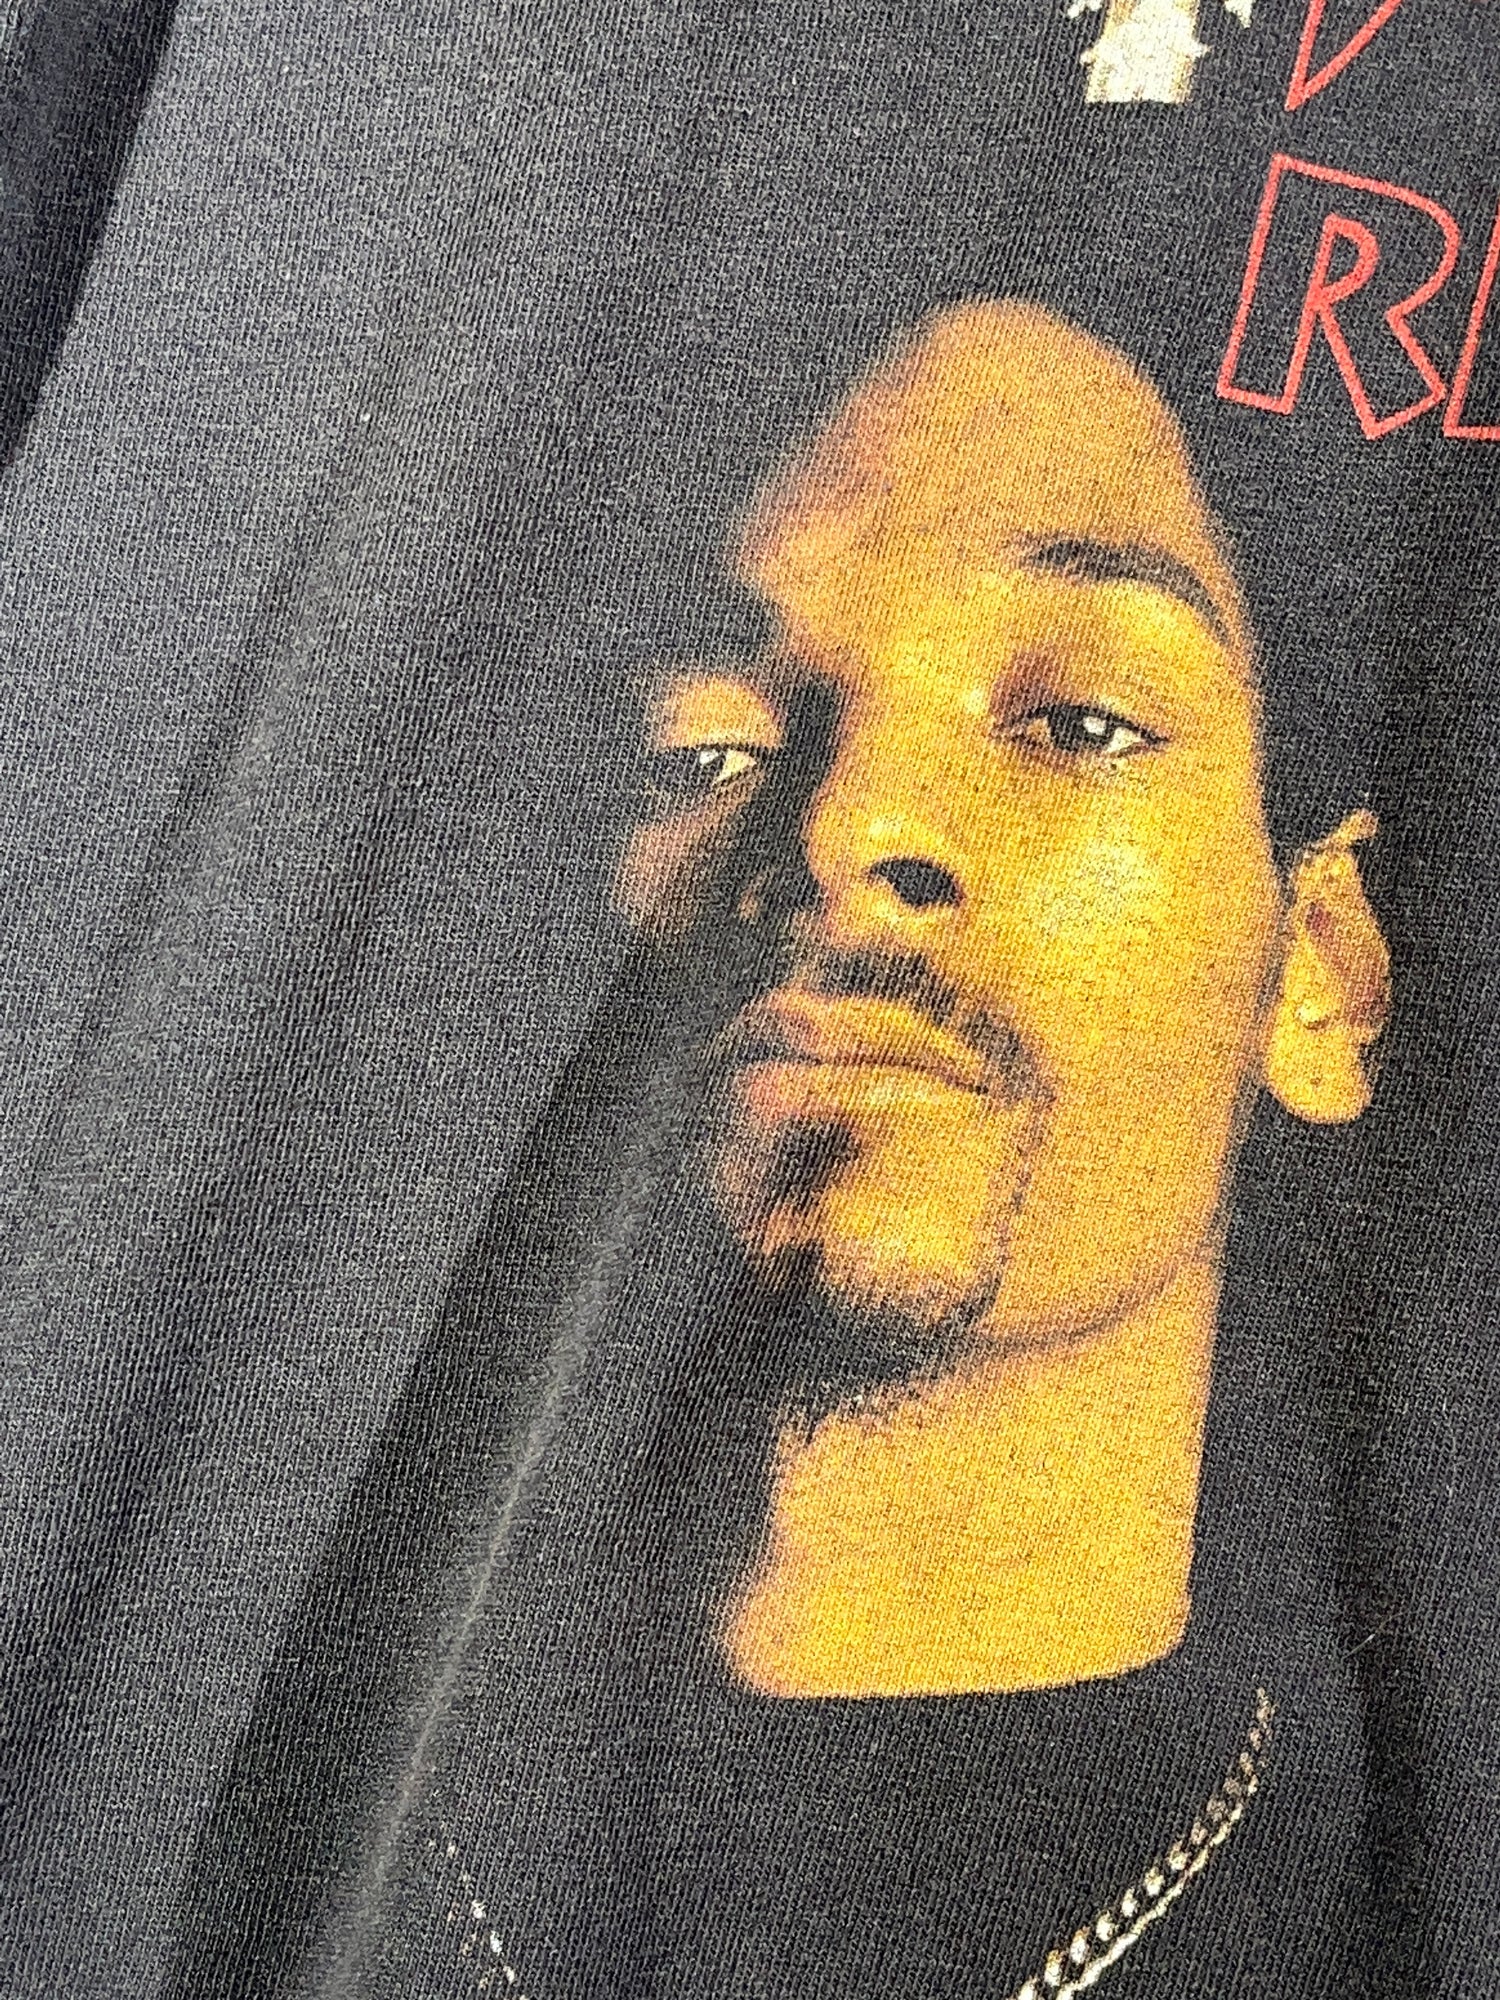 Vintage Death Row Records T-Shirt 2PAC SUGE SNOOP DRE – Glorydays